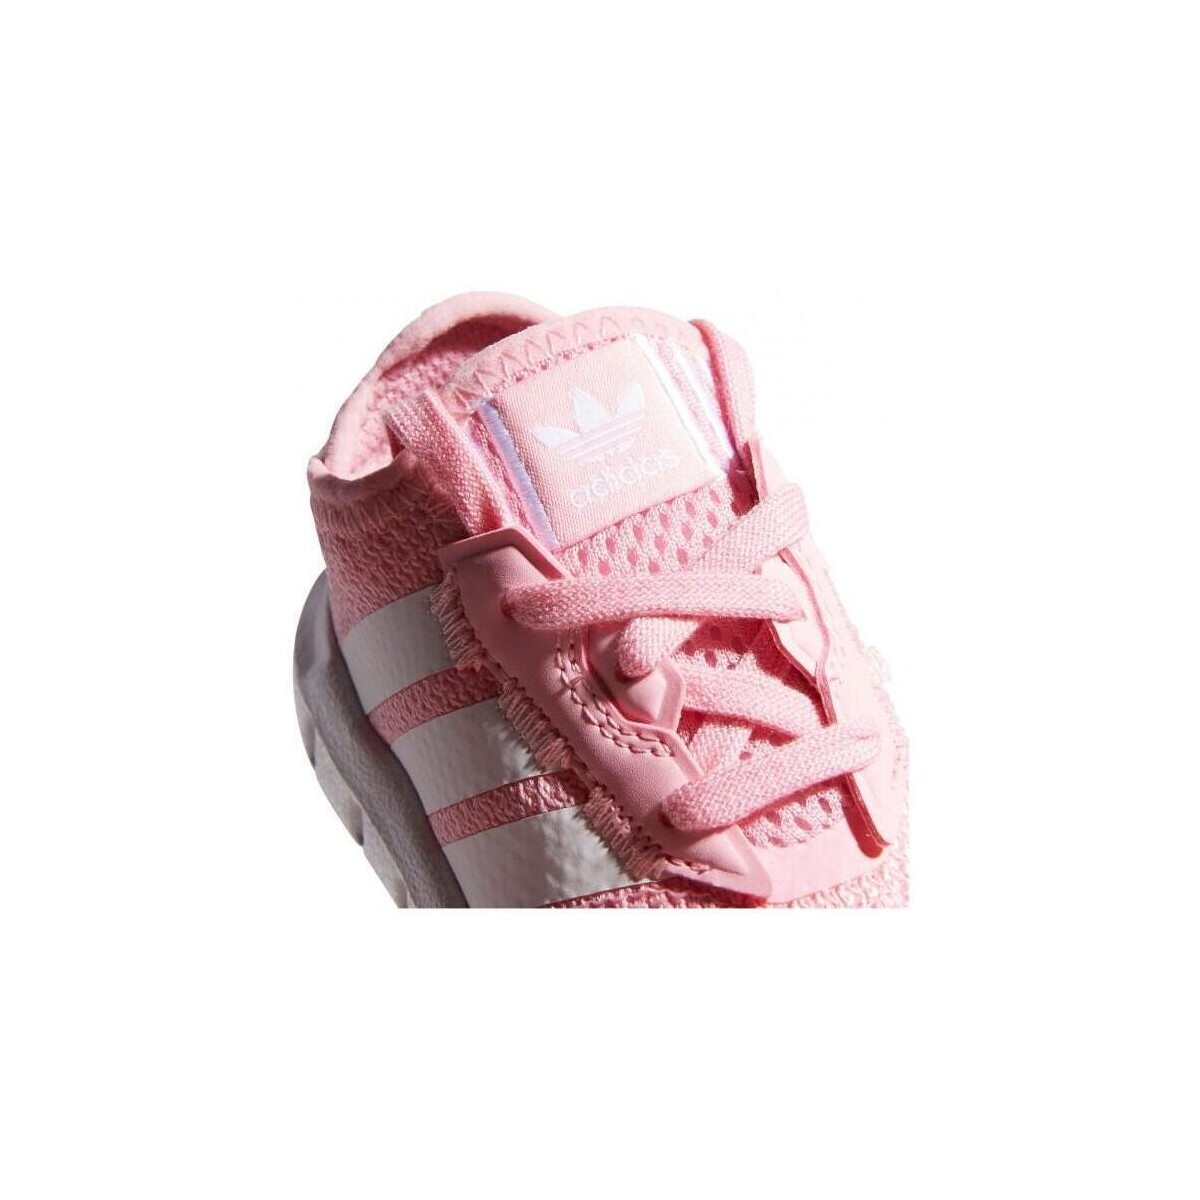 adidas Originals Rose Baby Swift Run X I FY2183 xZcfcWsA